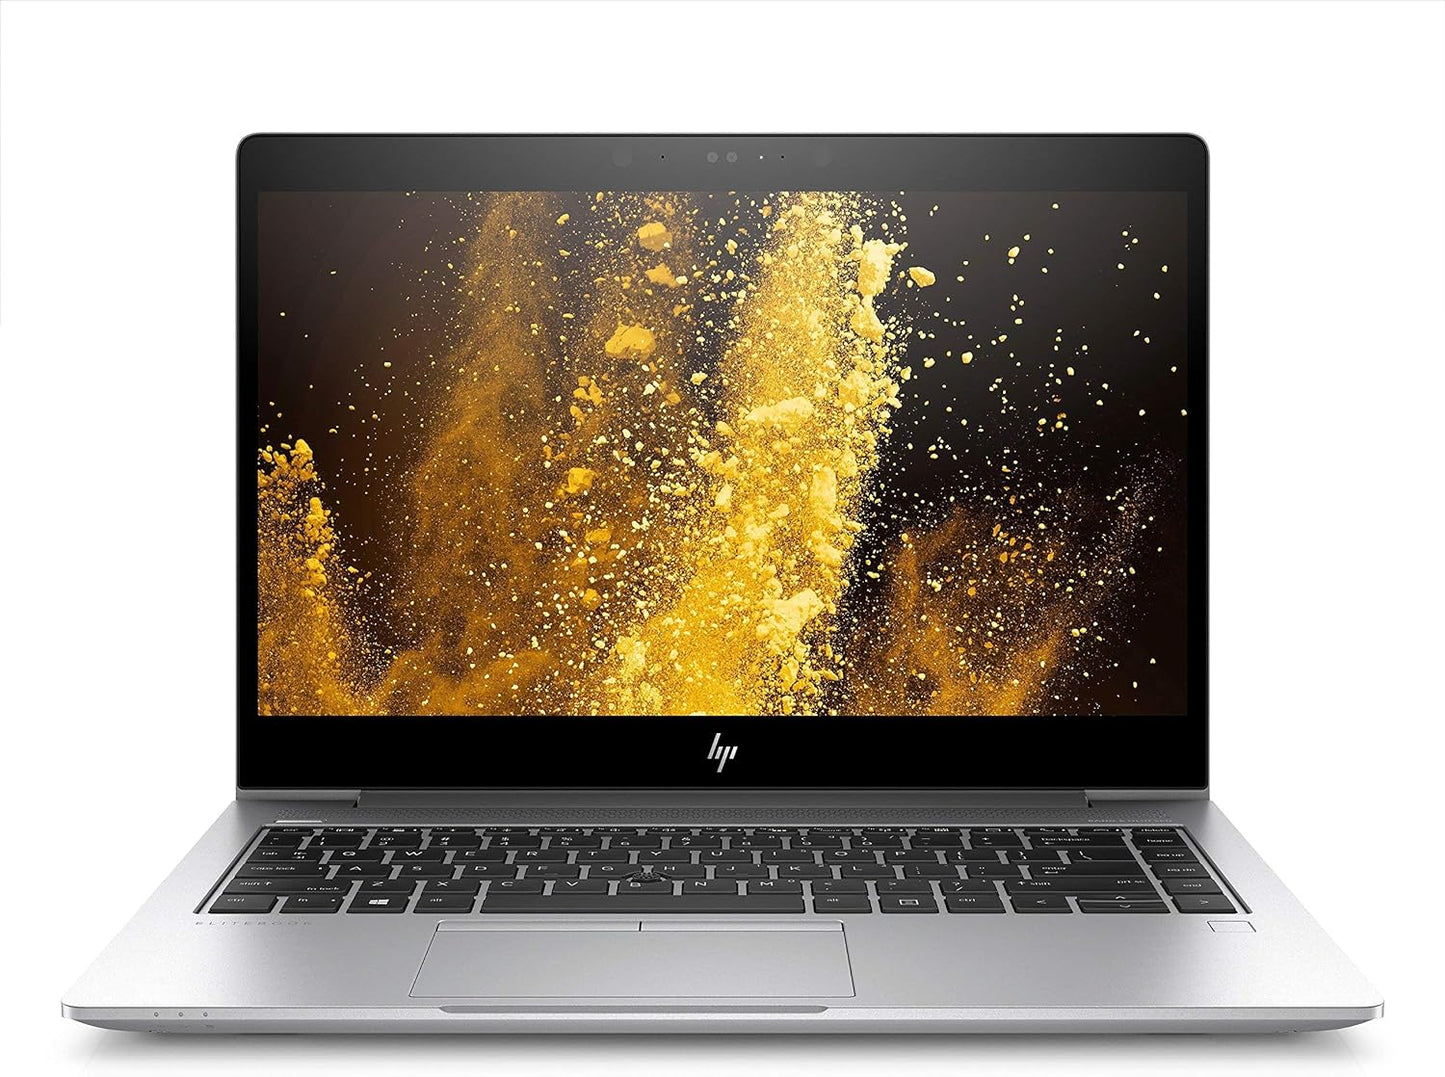 HP Elitebook G5 14" Laptop- Intel Core i5 8th Gen CPU - 8GB RAM - 256GB SSD - Windows 11 Pro OS